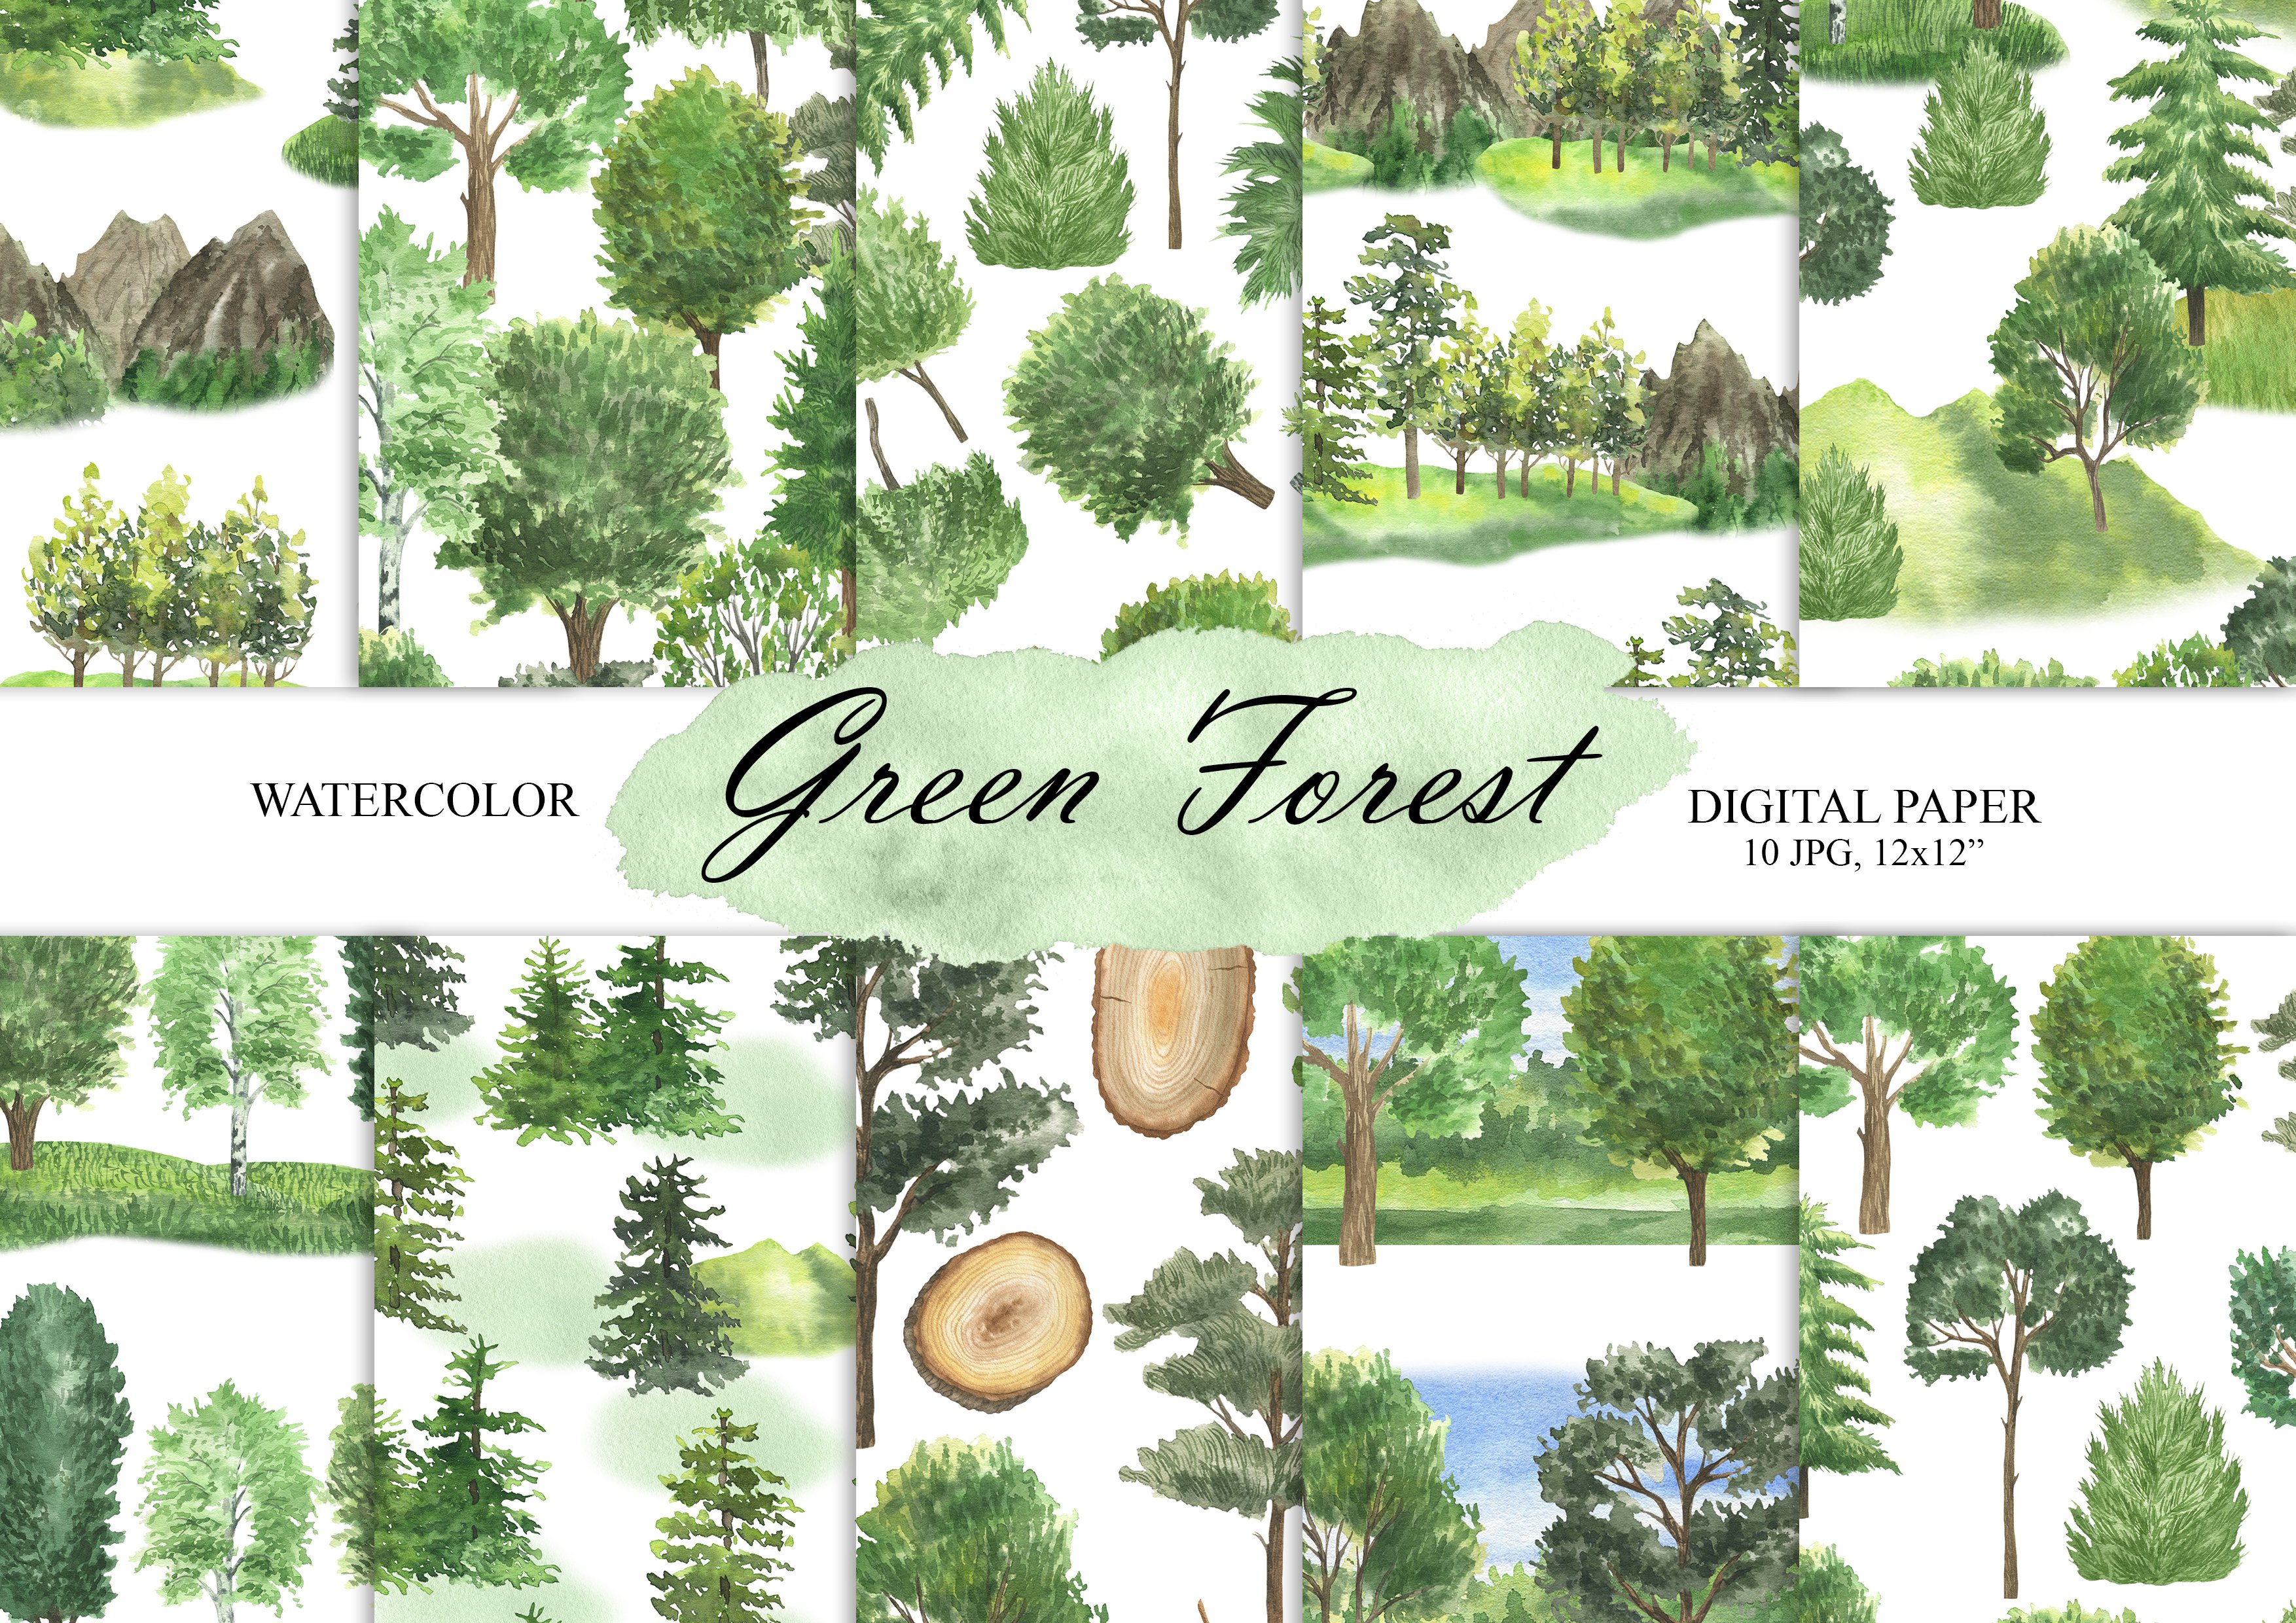 Green forest digital paper.